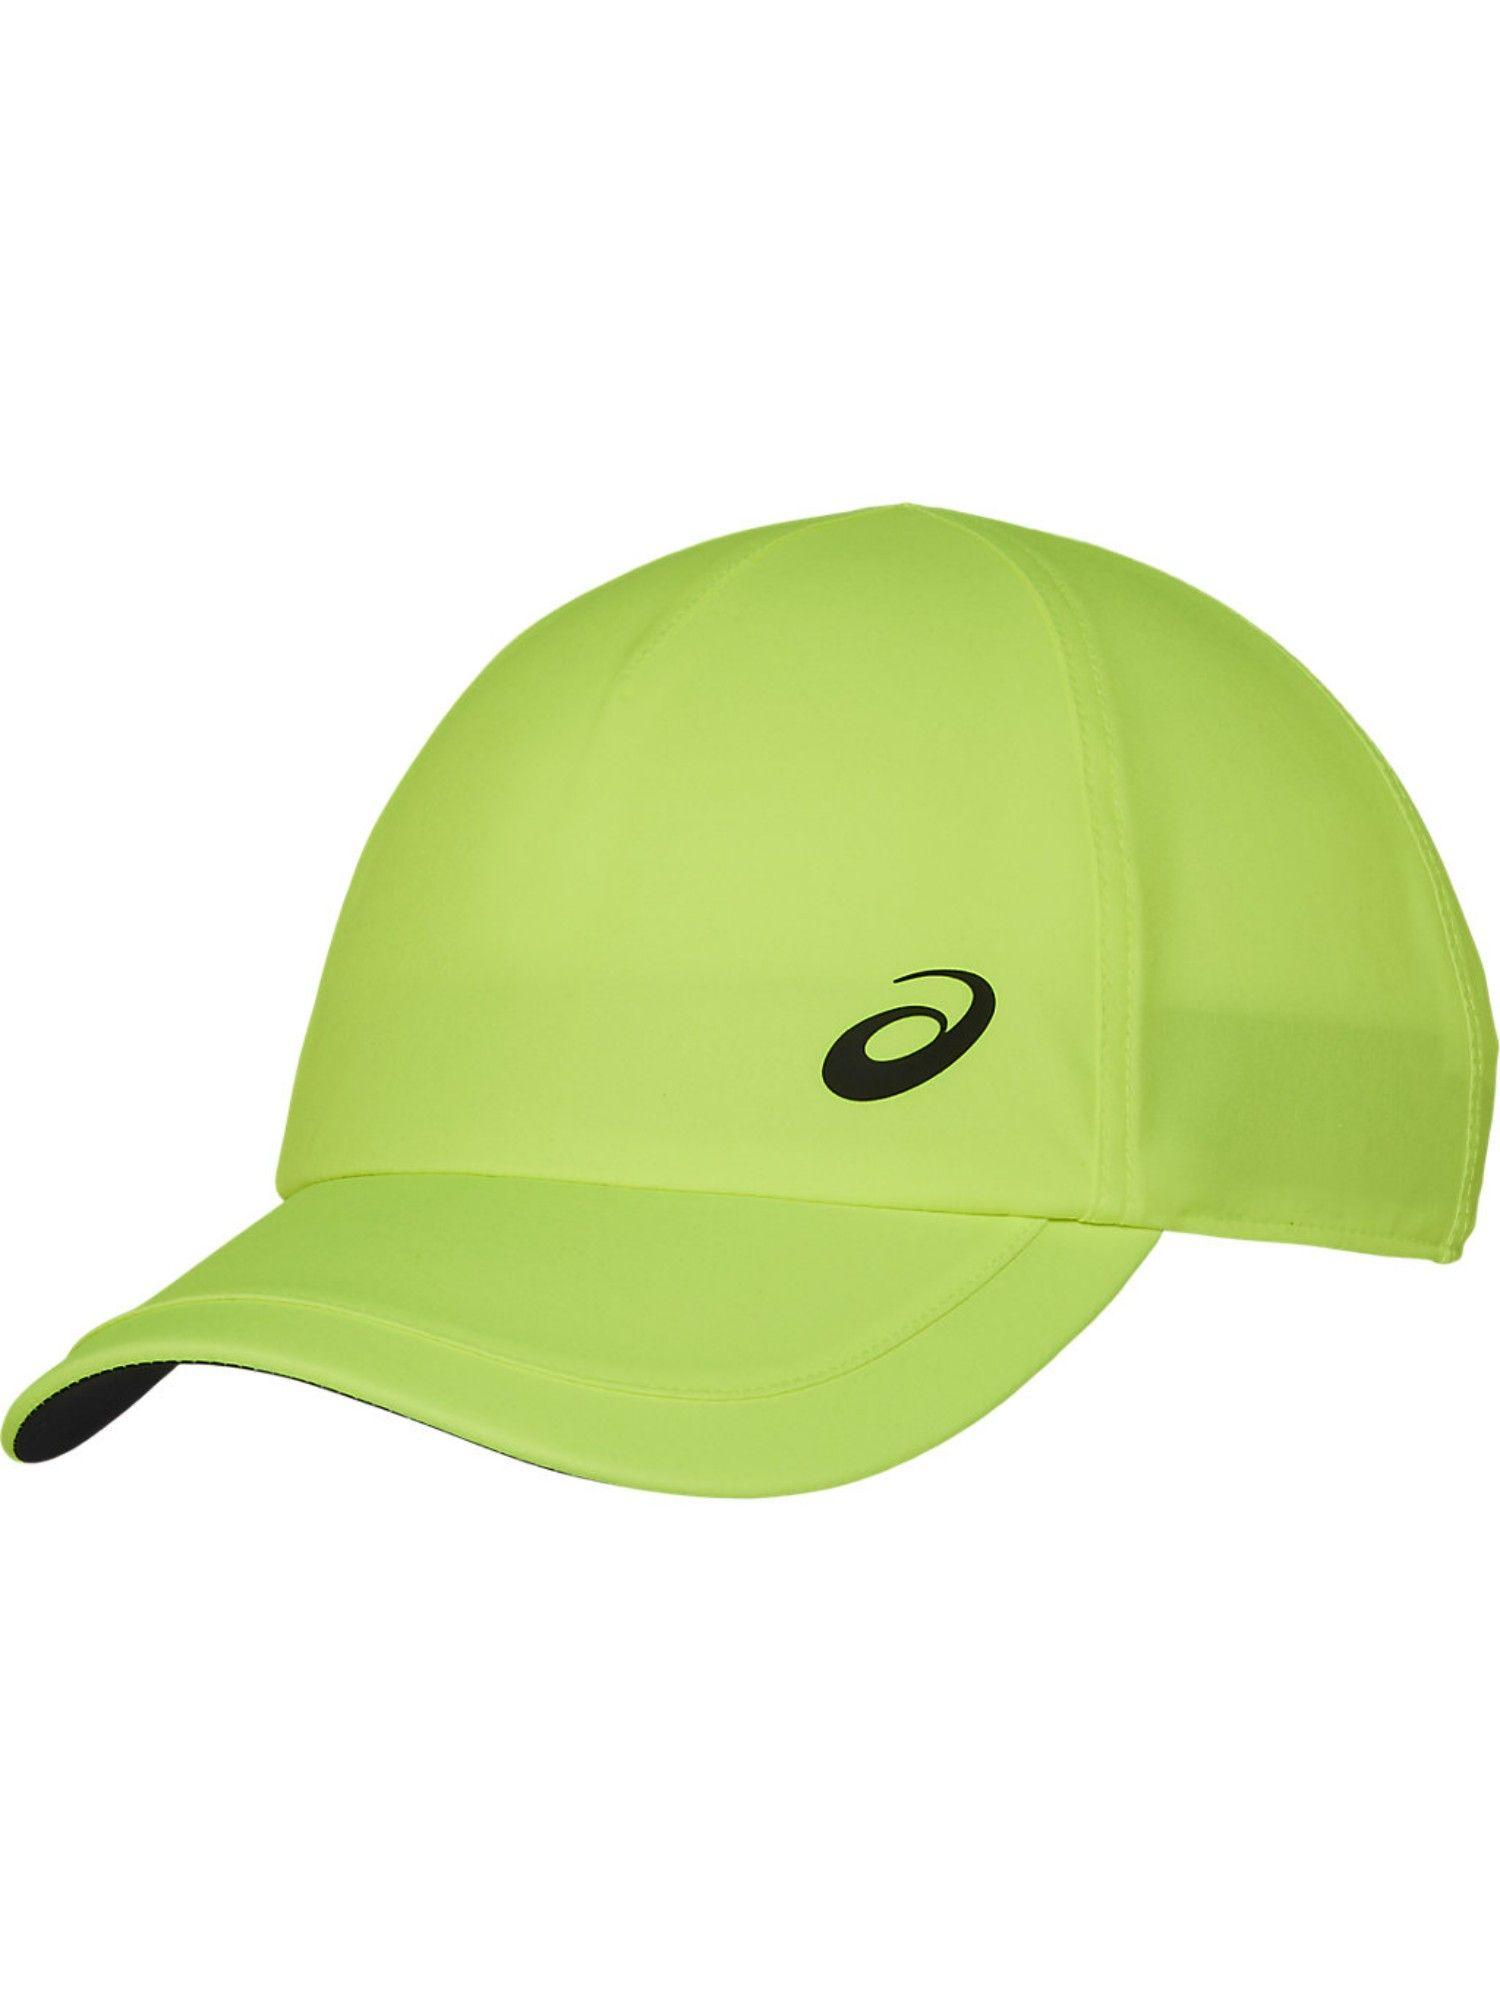 pf-green-unisex-cap